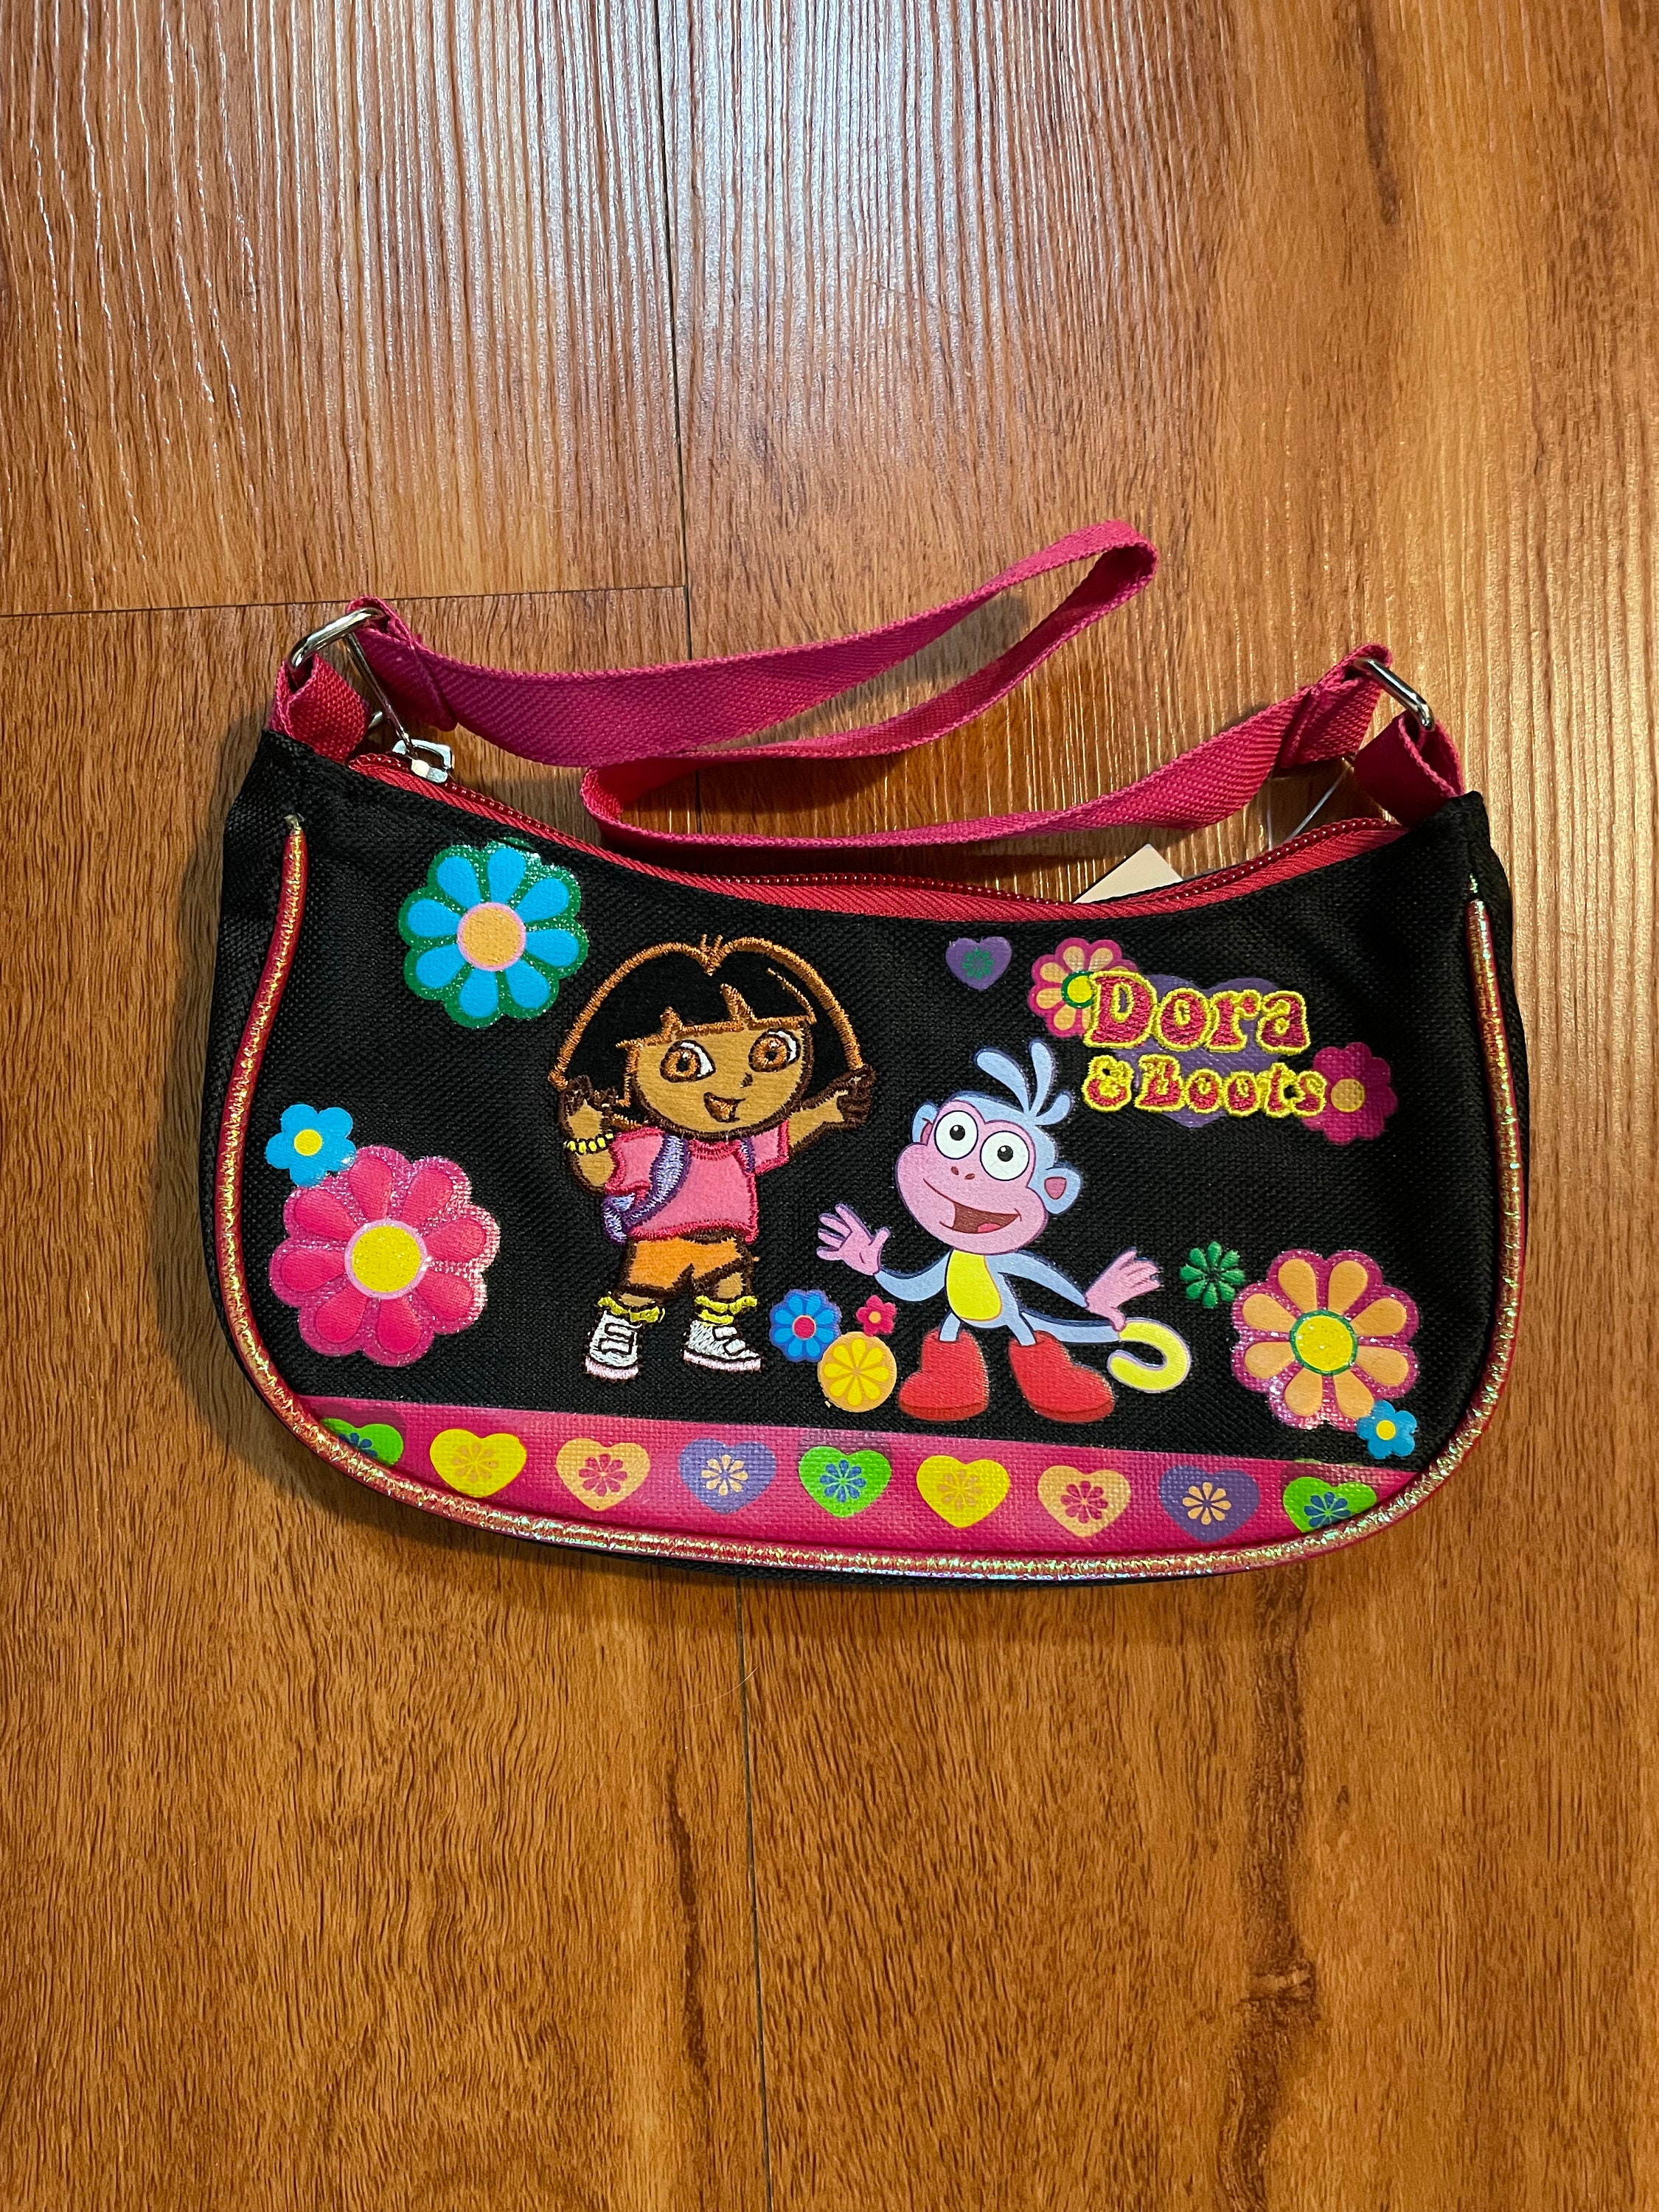 Accessories | Brand New Dora The Explorer Rolling Backpack | Poshmark